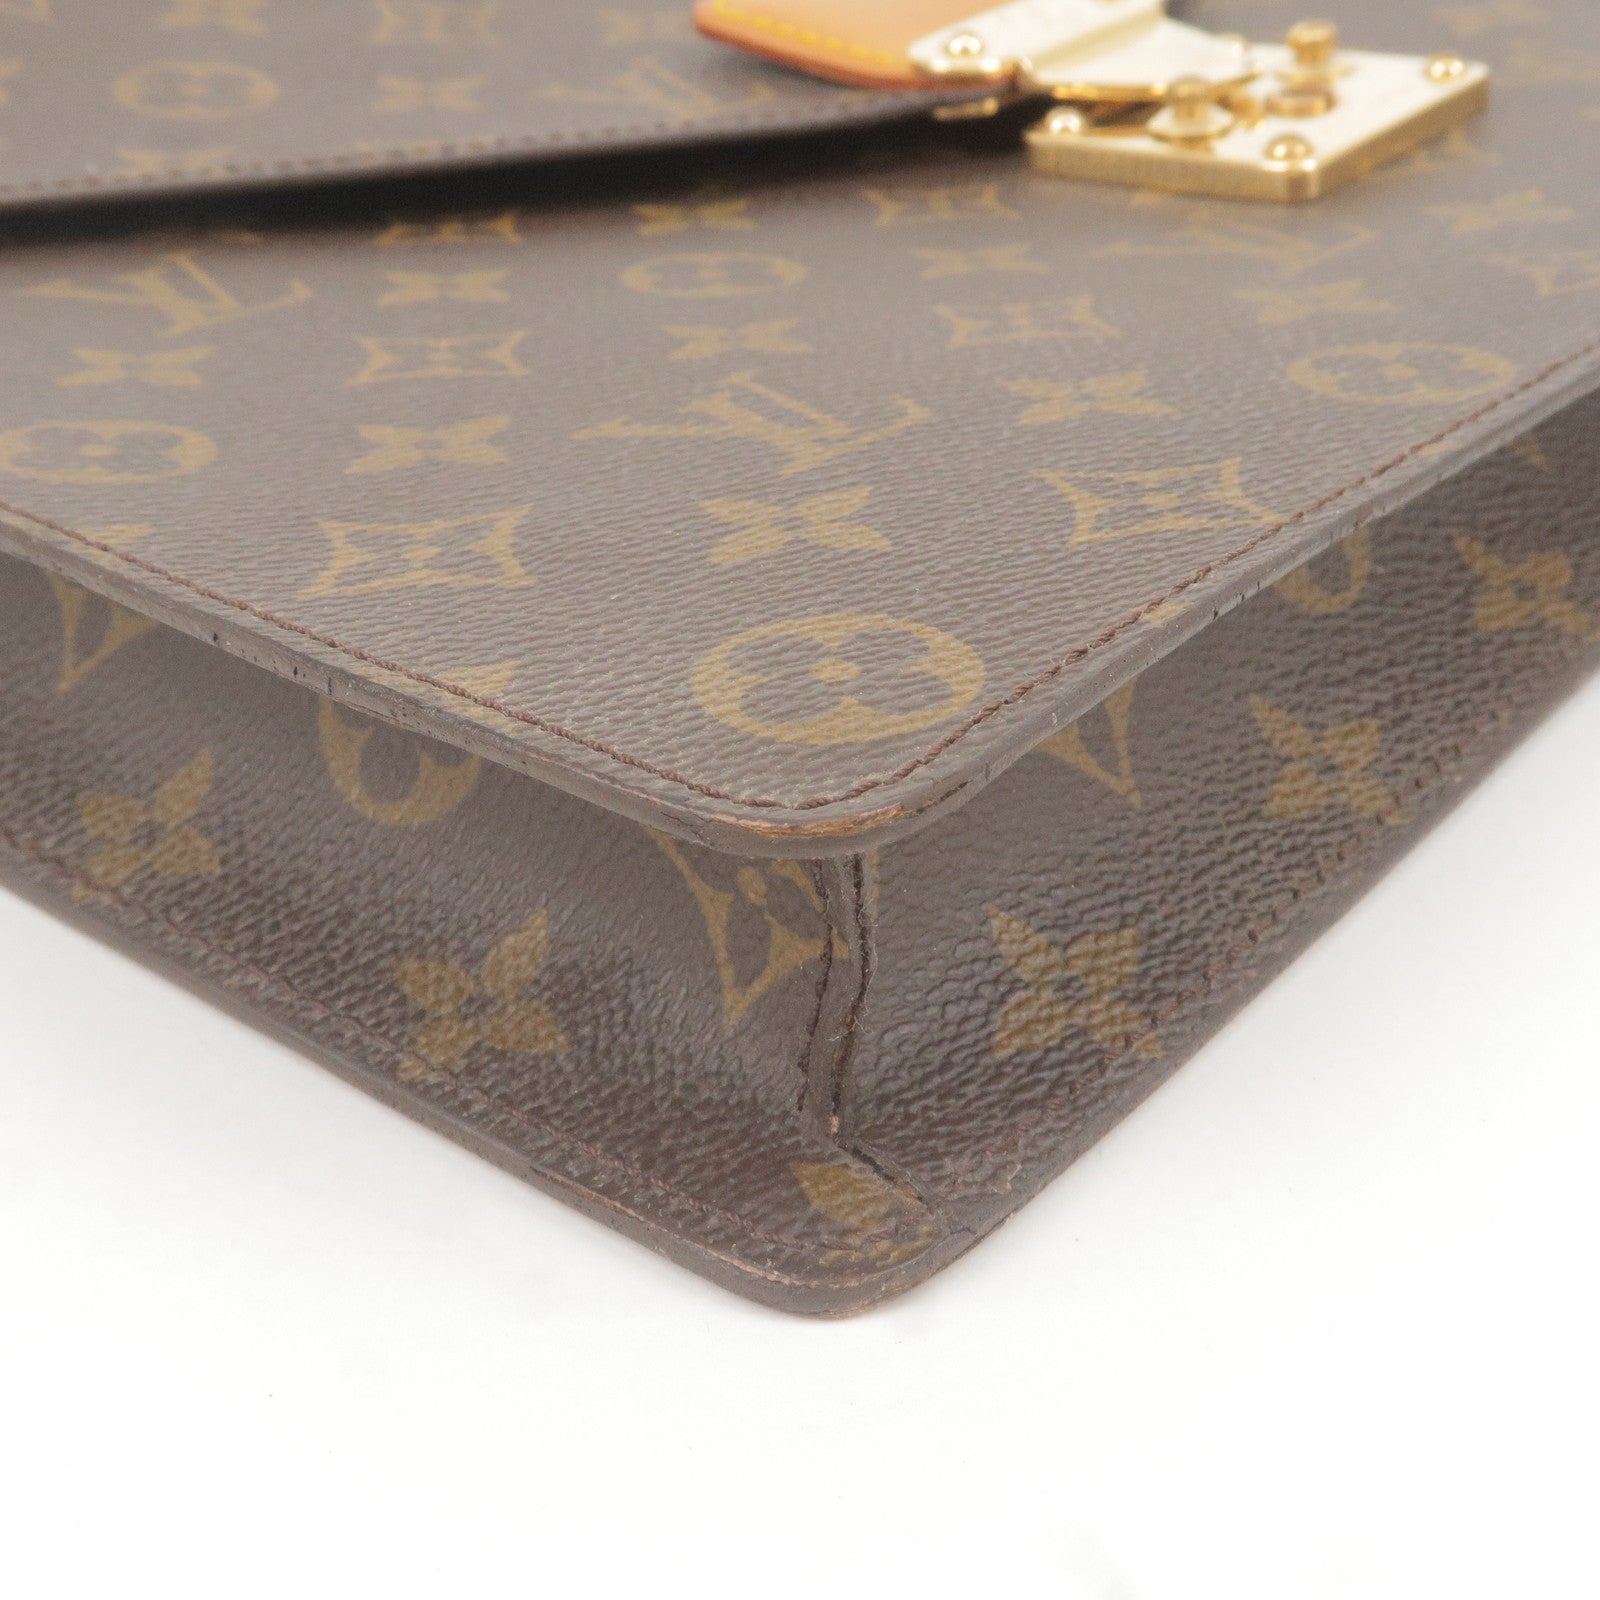 Louis Vuitton Monogram Laguito Briefcase